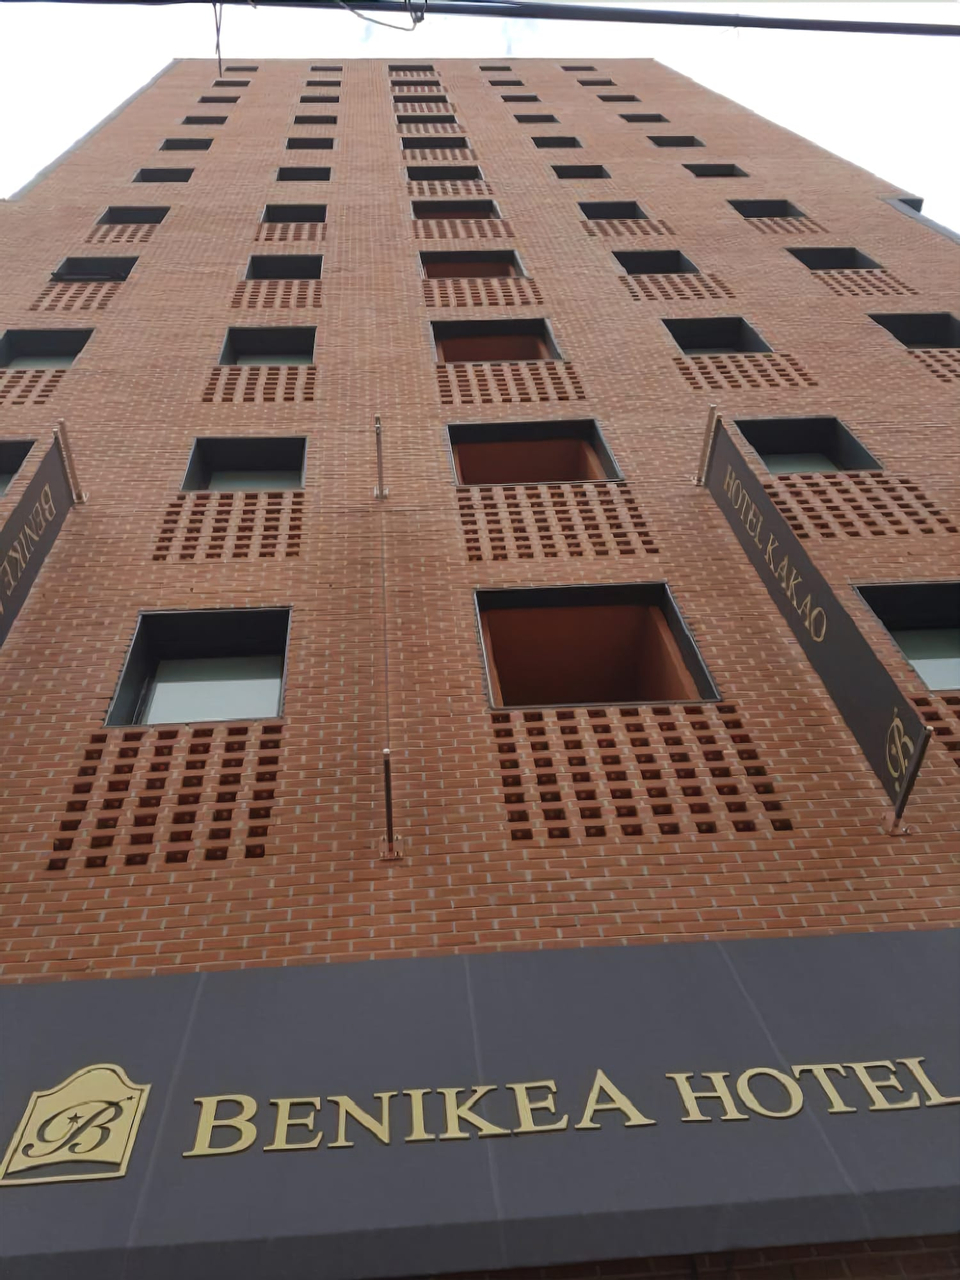 Benikea Hotel Kakao, Yeongdeungpo